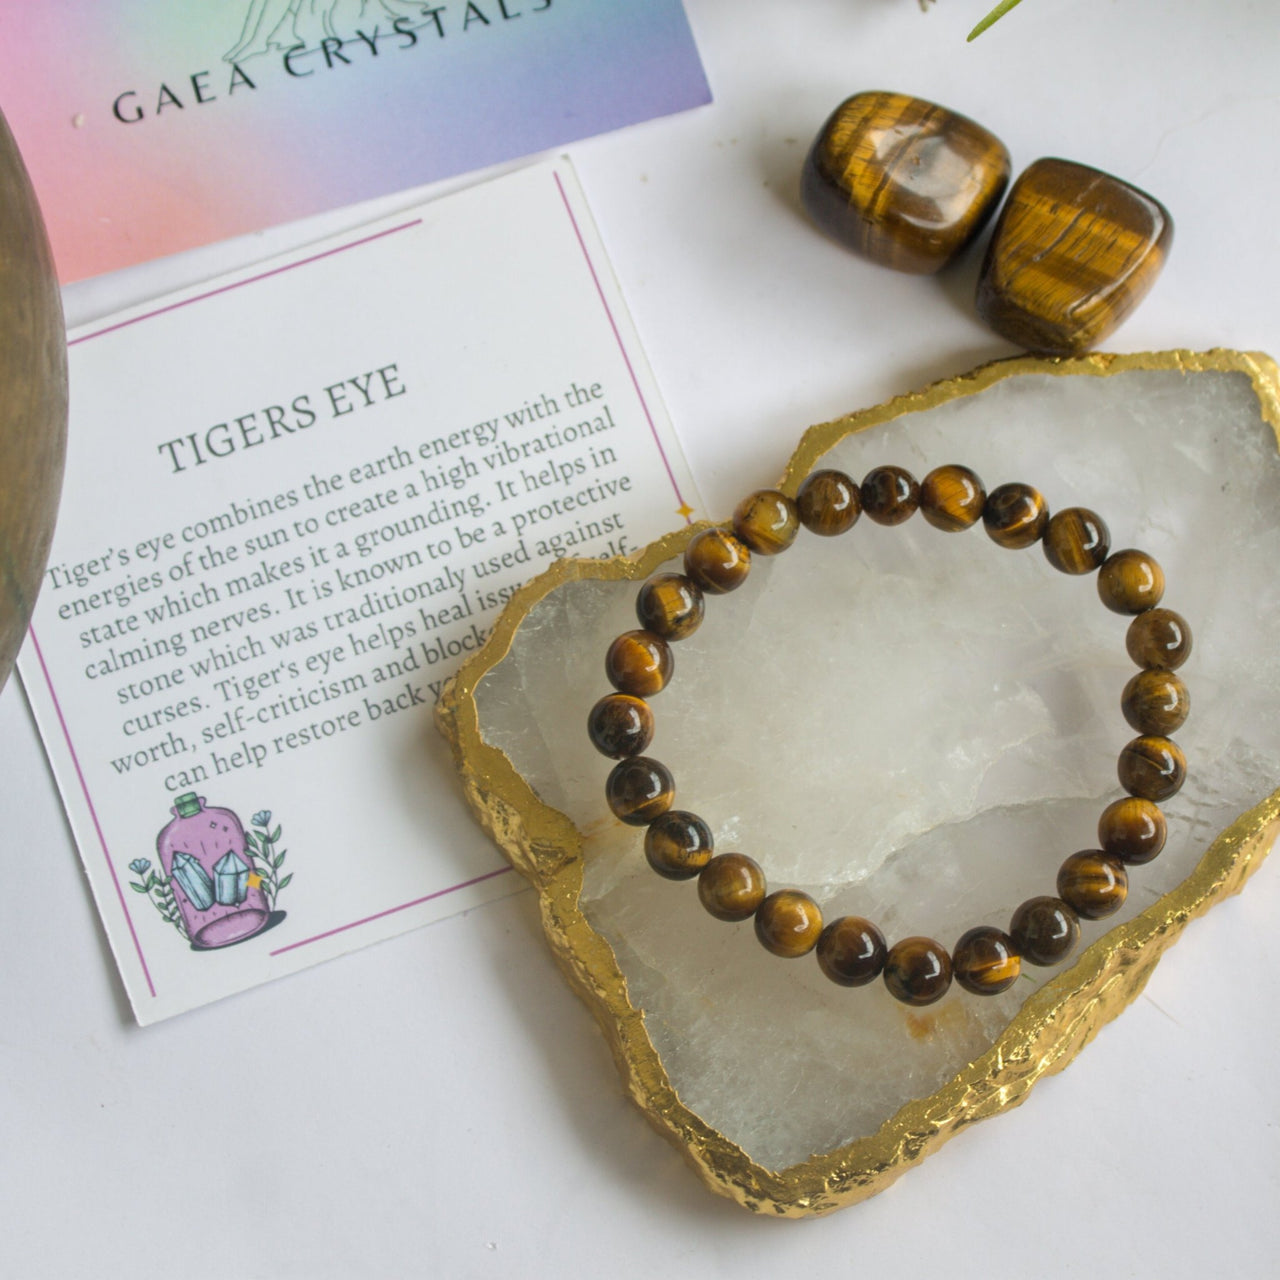 Gaea Crystals - Tiger's Eye Bracelet - CBD Store India